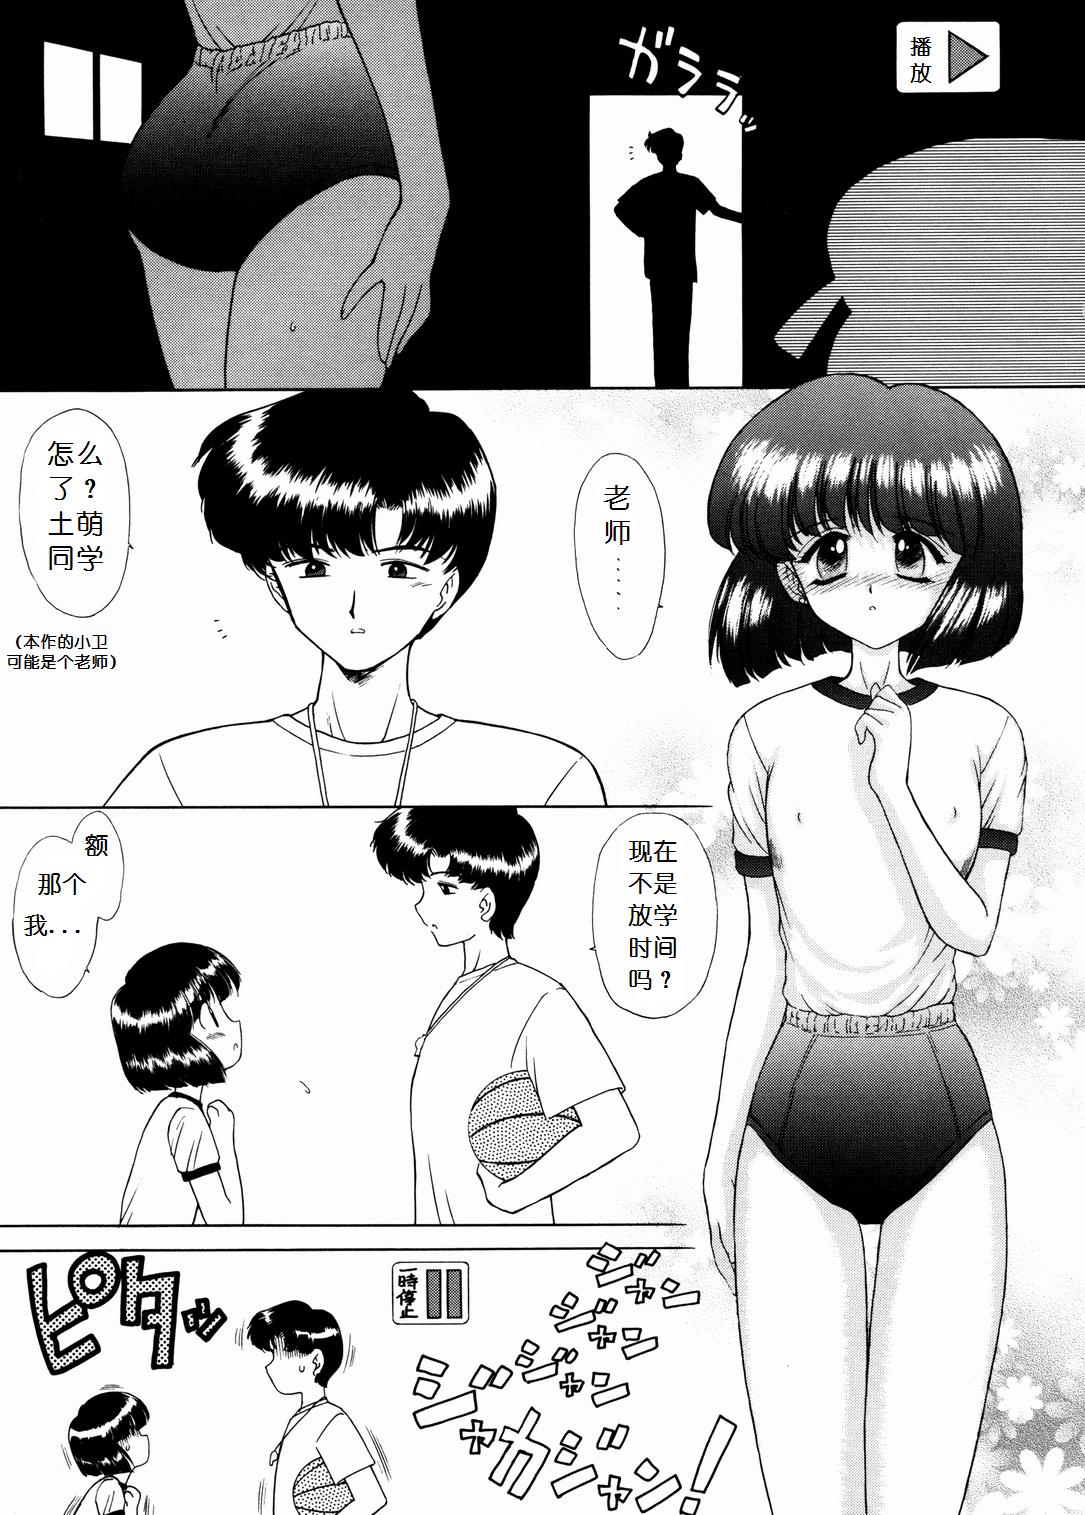 Tetona talking head and judgement - Sailor moon Hd Porn - Page 2